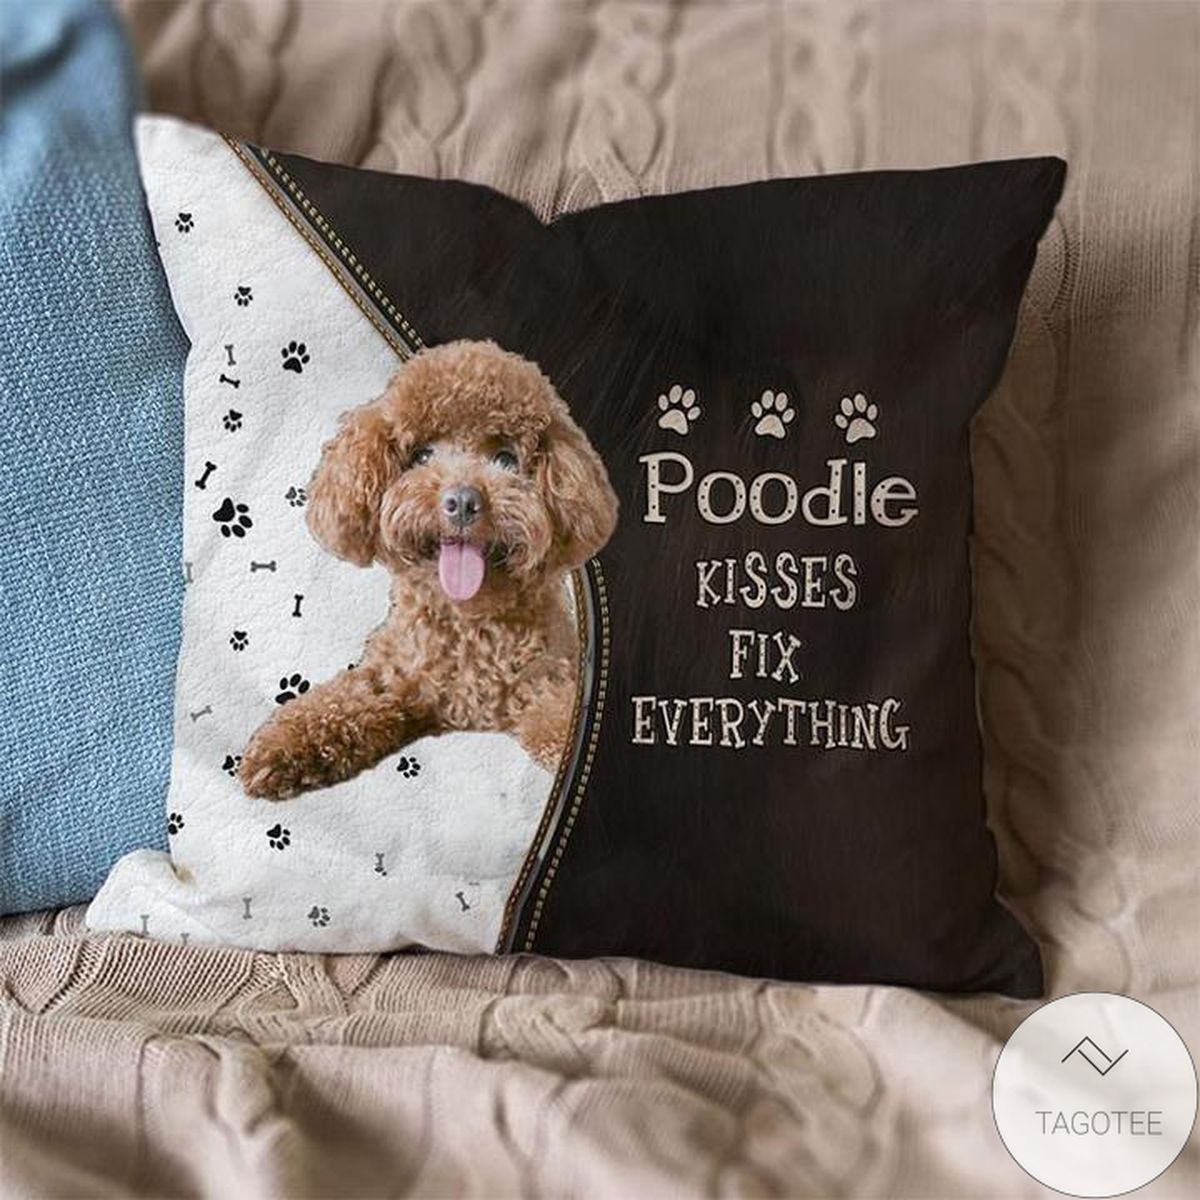 Poodle Kisses Fix Everything Pillowcase